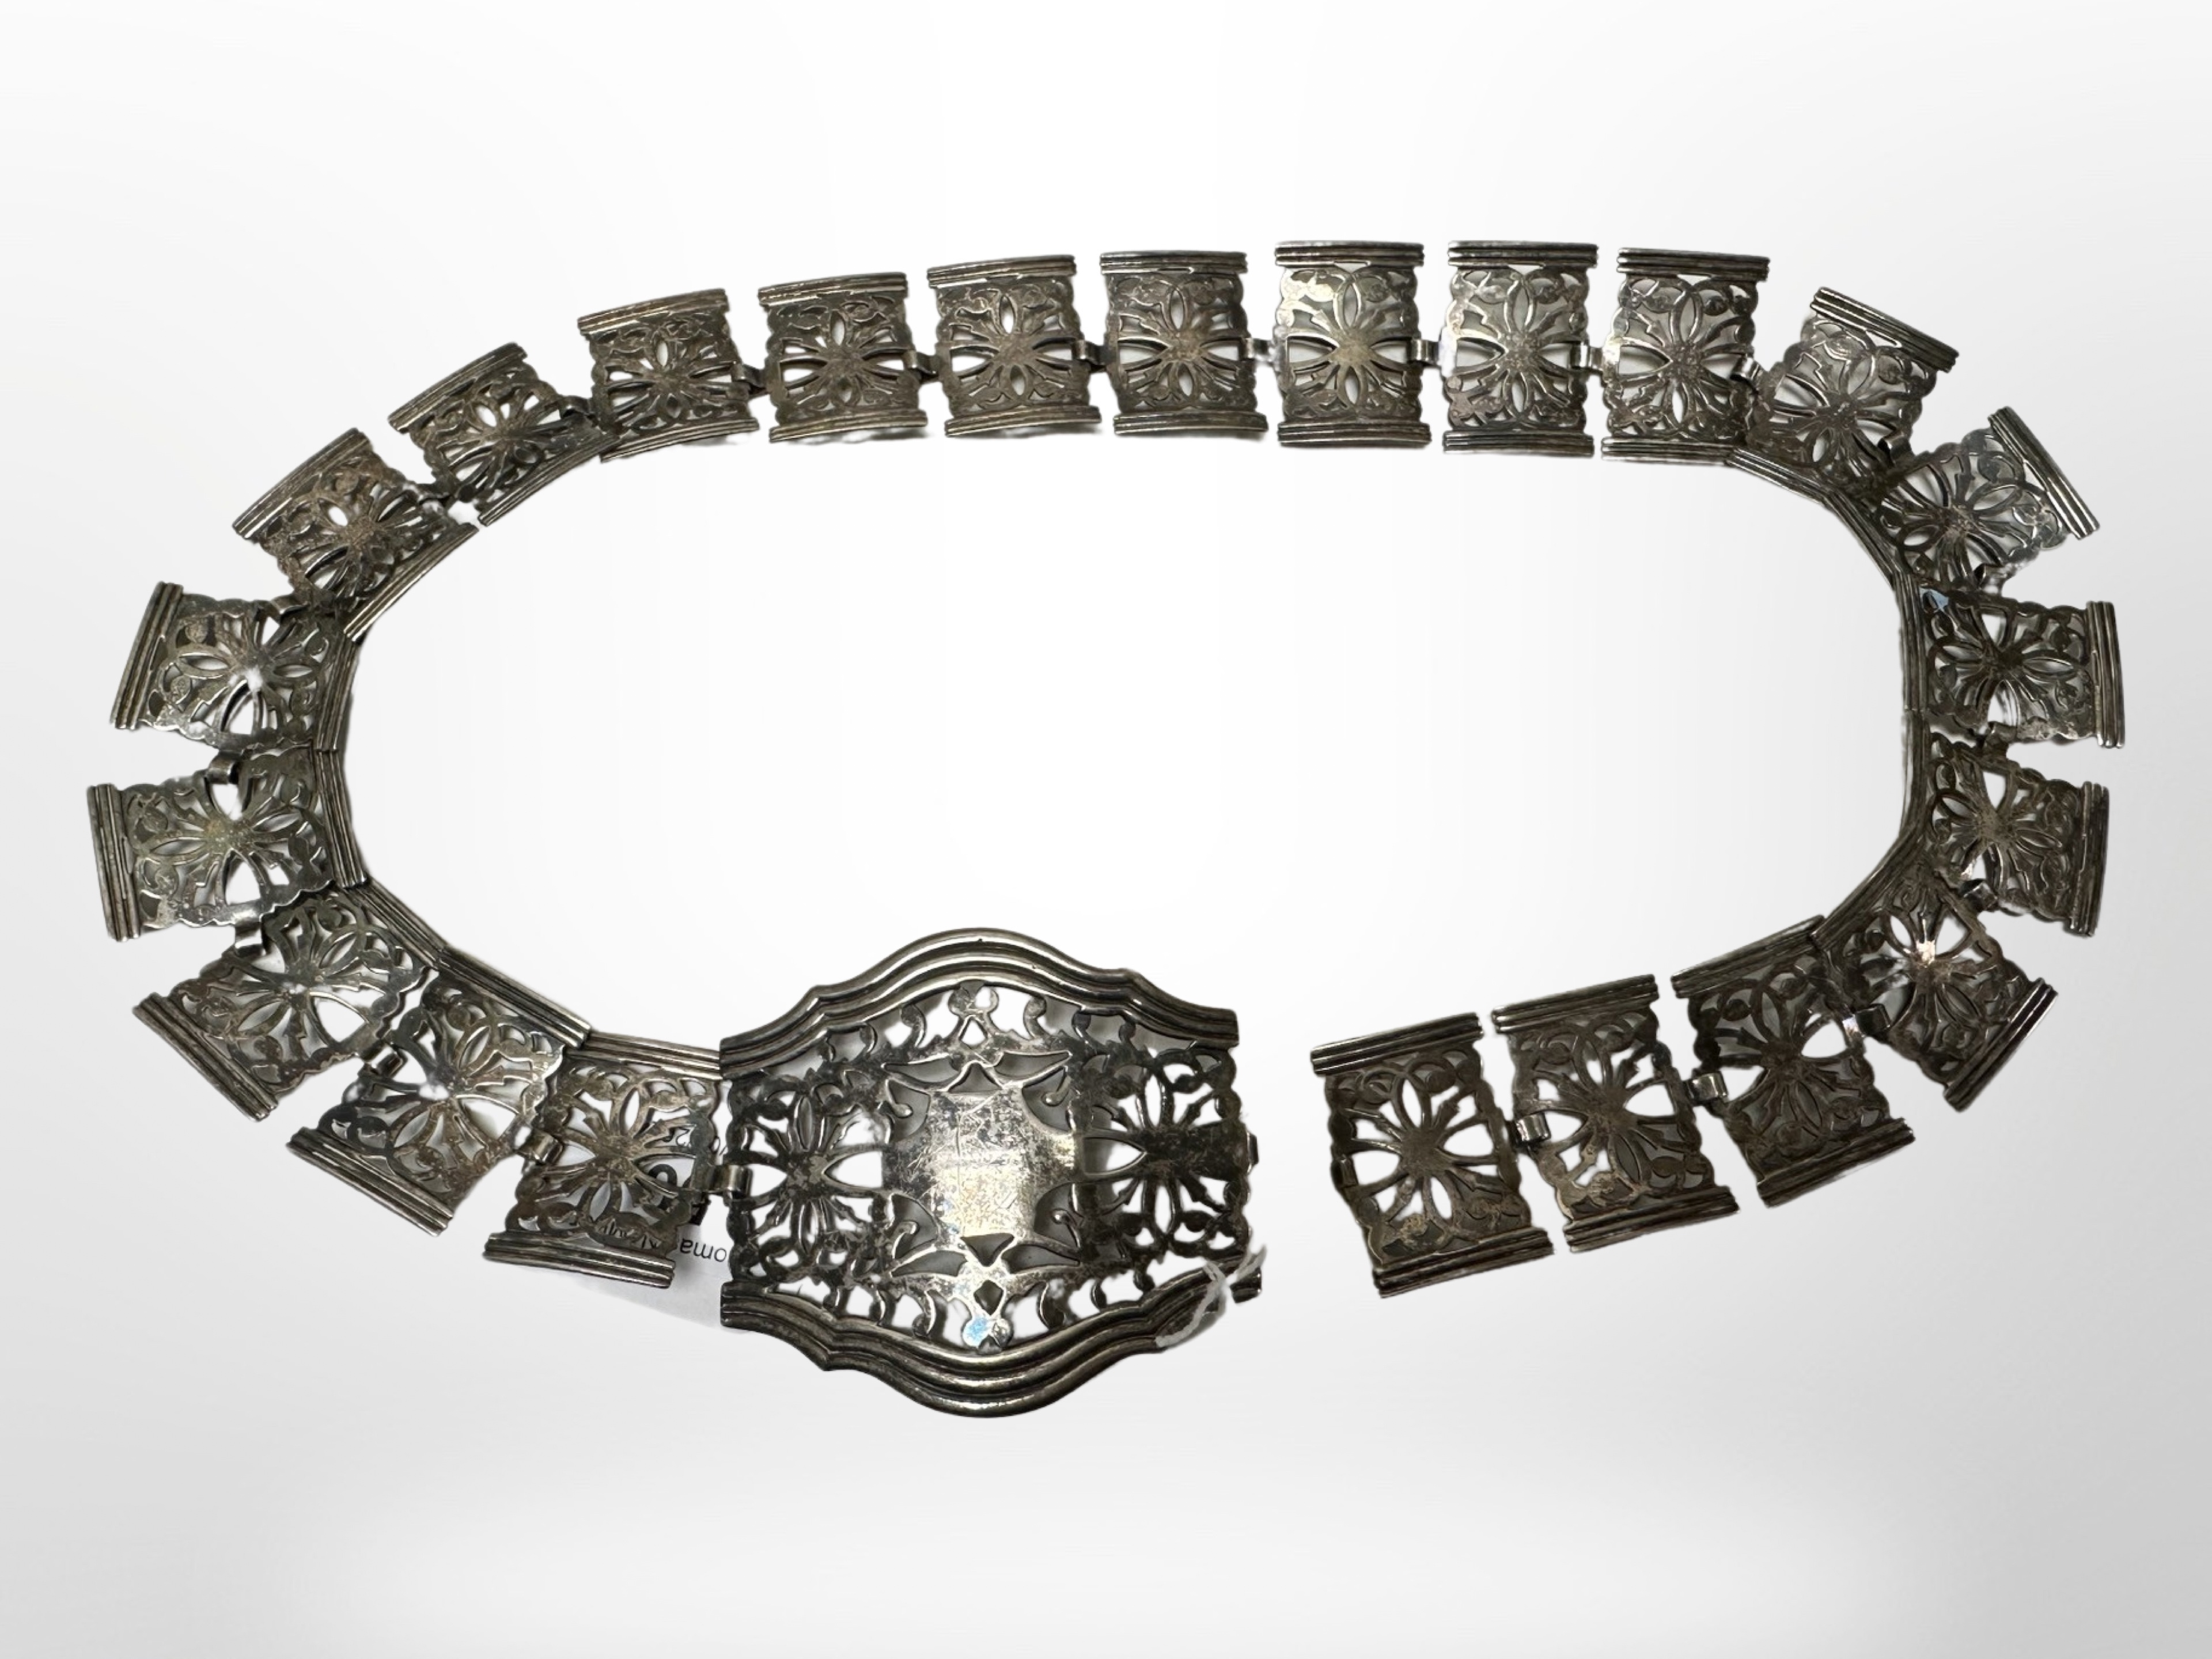 A silver-plated nurse's belt.